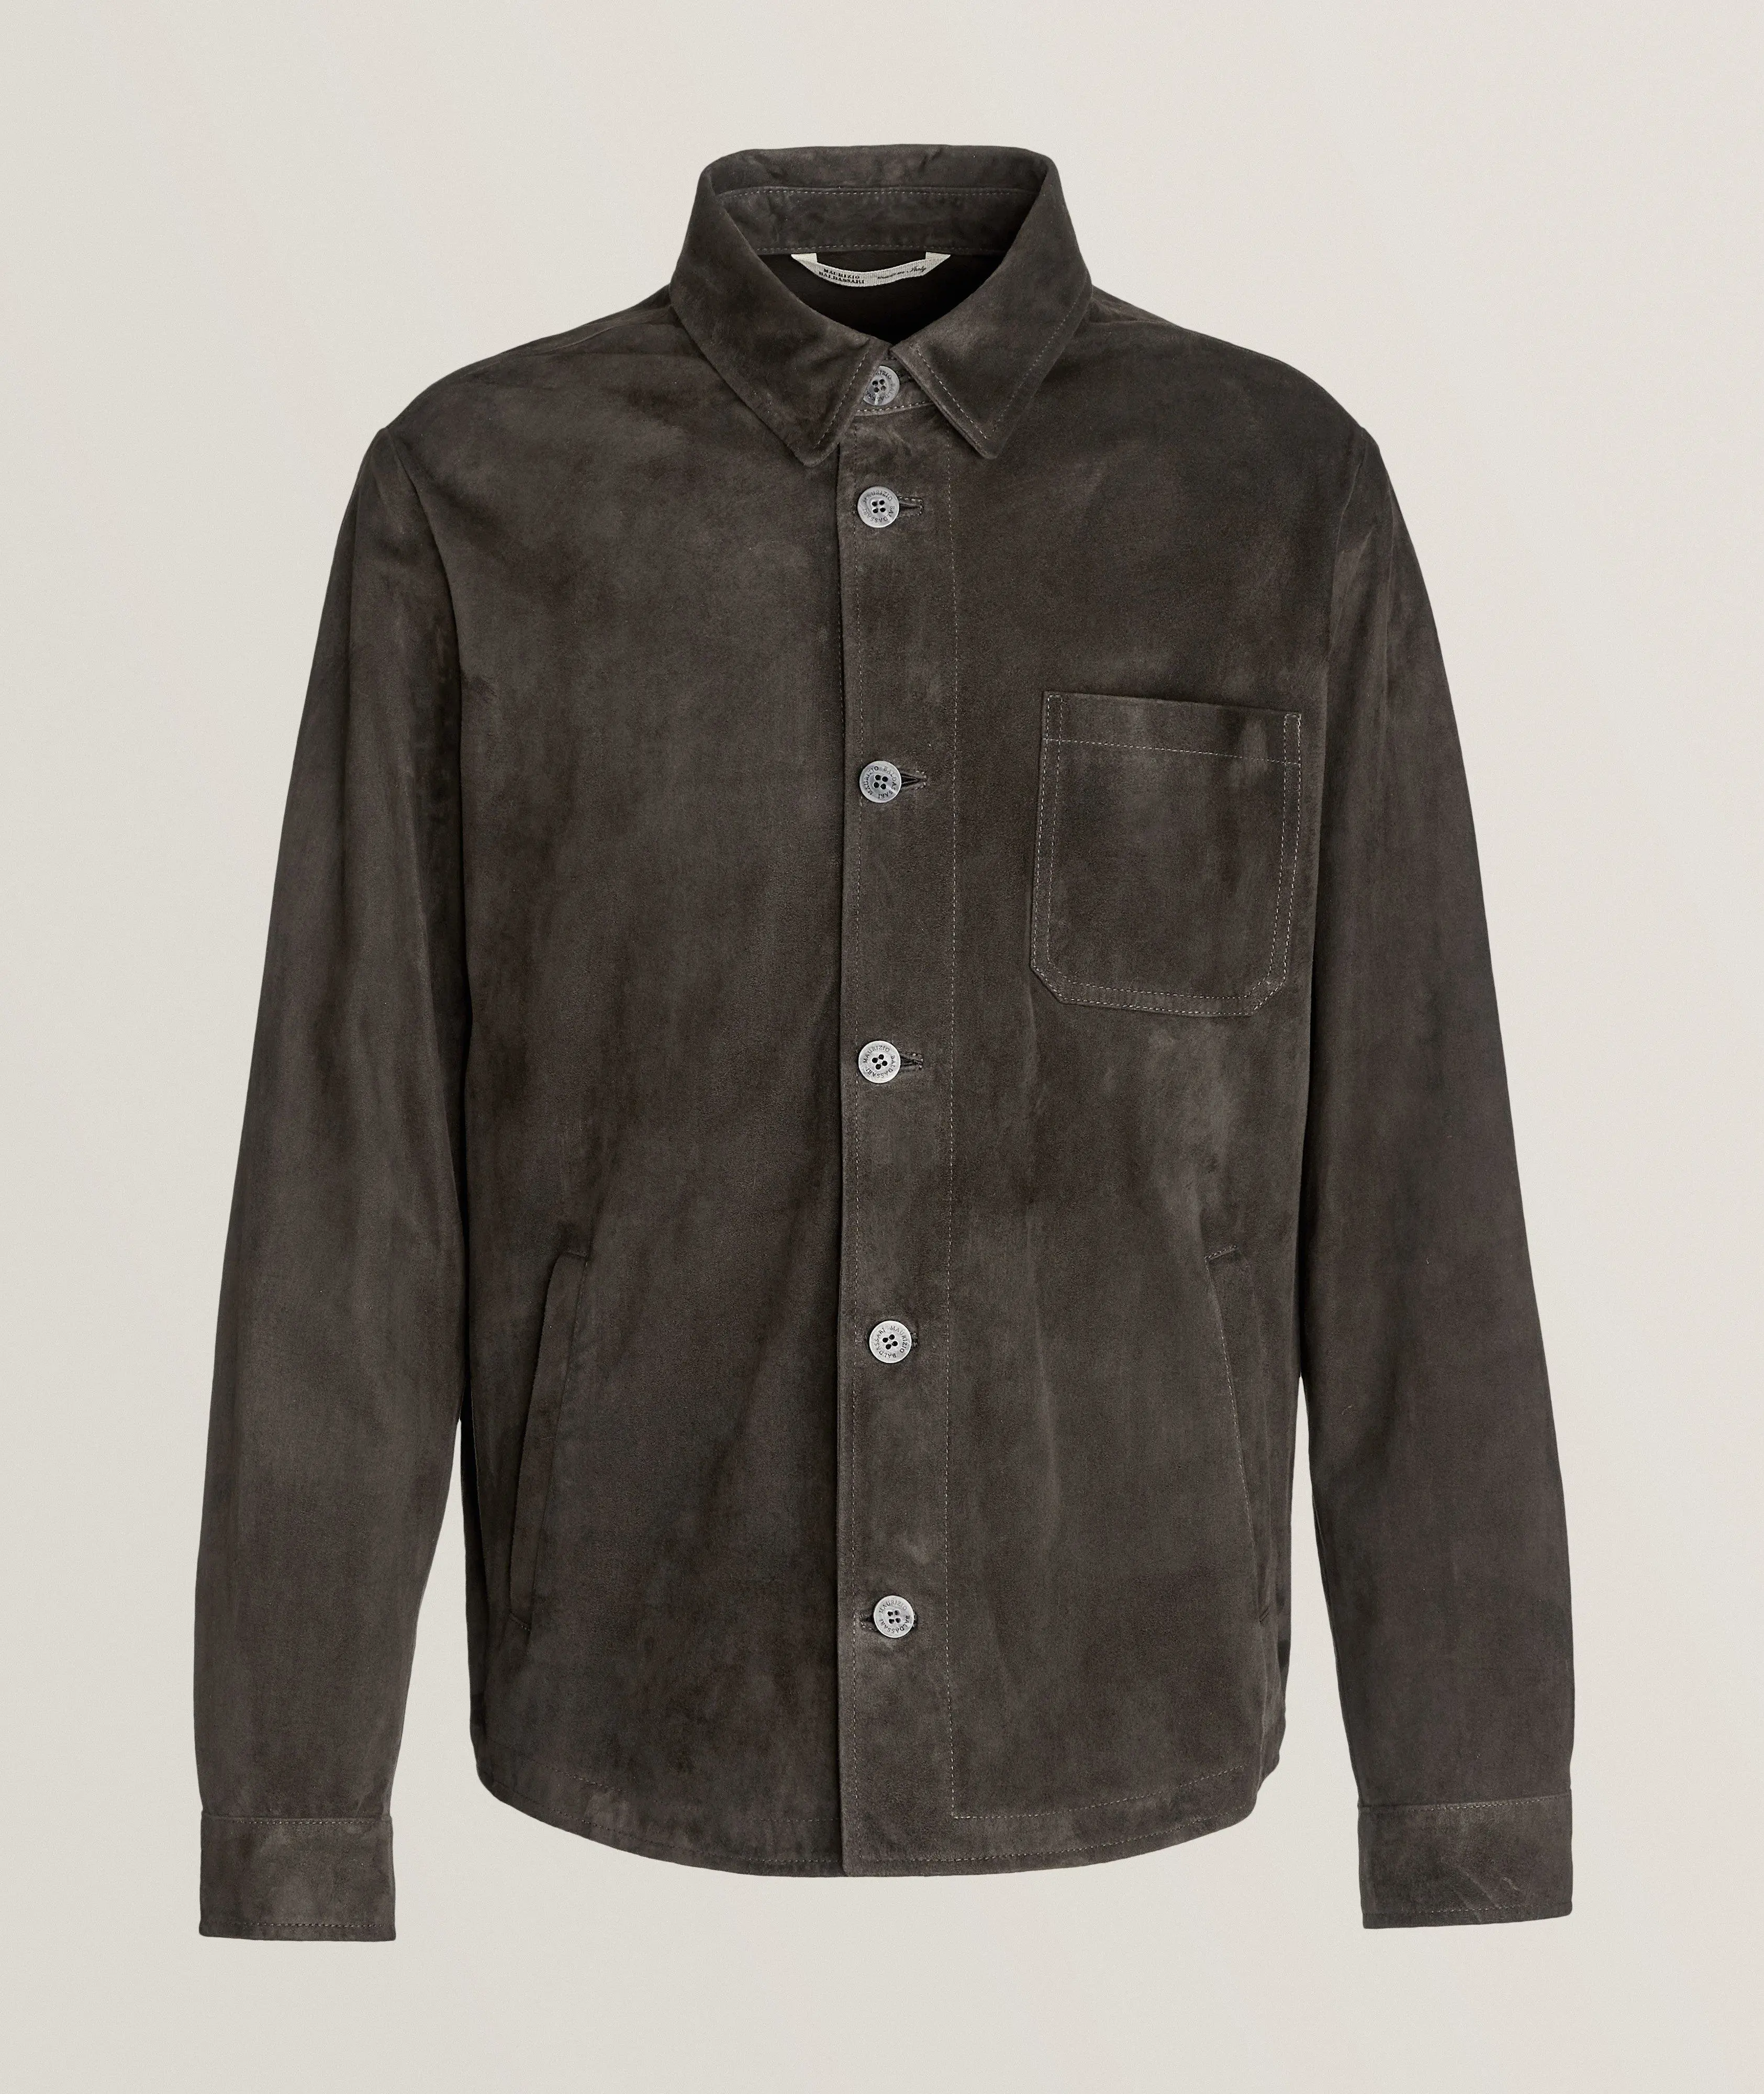 Harry Rosen Brera Suede-Leather Overshirt. 1